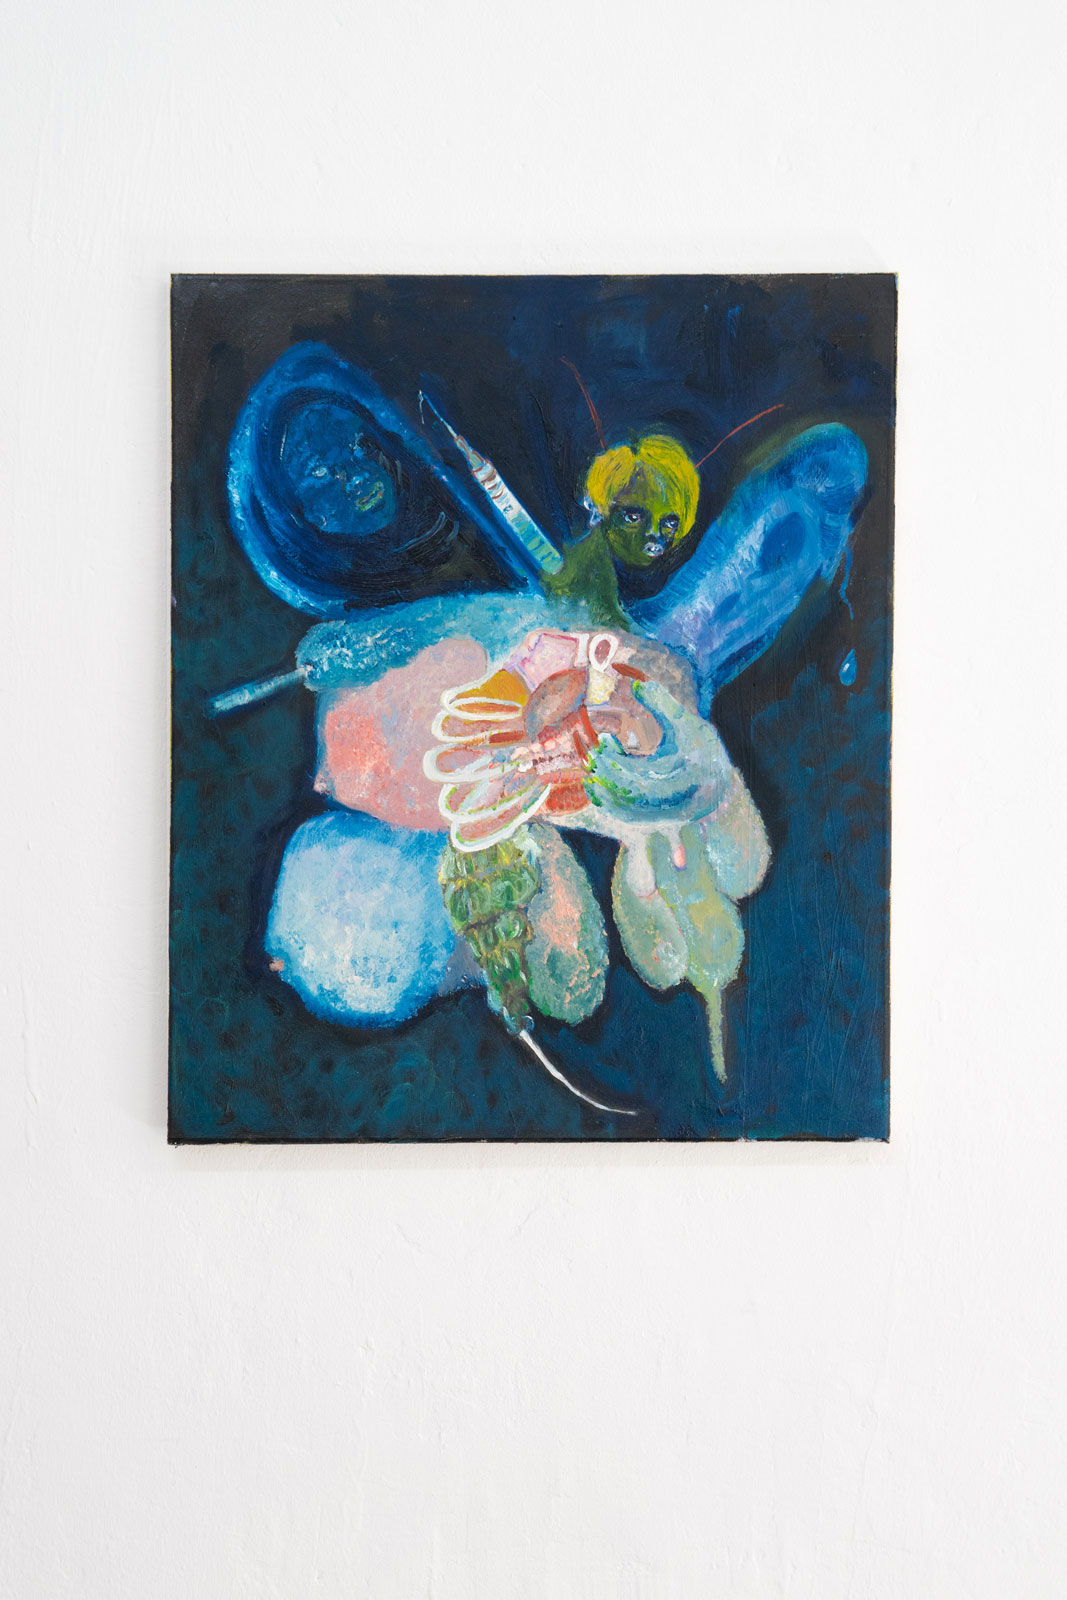 Joseph Geagan, Schmettertwink, 2018, Oil on canvas, 60 x 50 cm